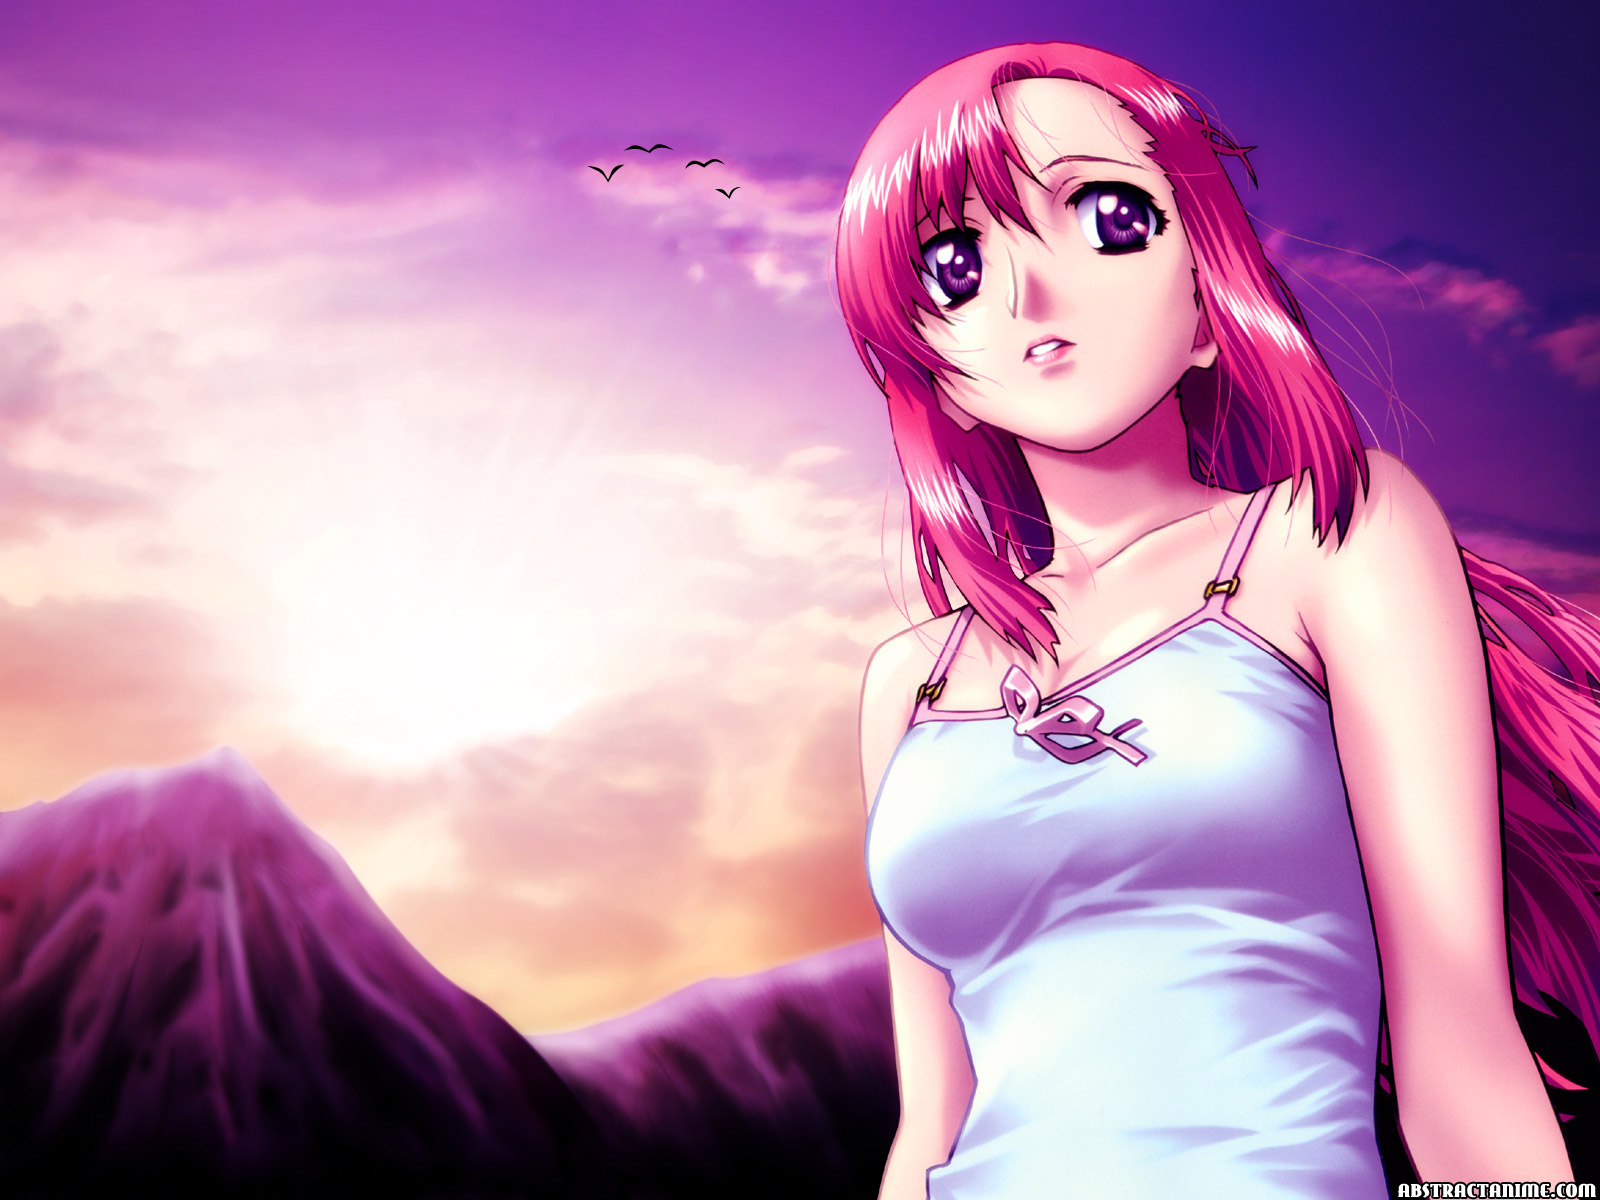 Cute Anime Girl   HD Wallpapers   Cute Anime Girl